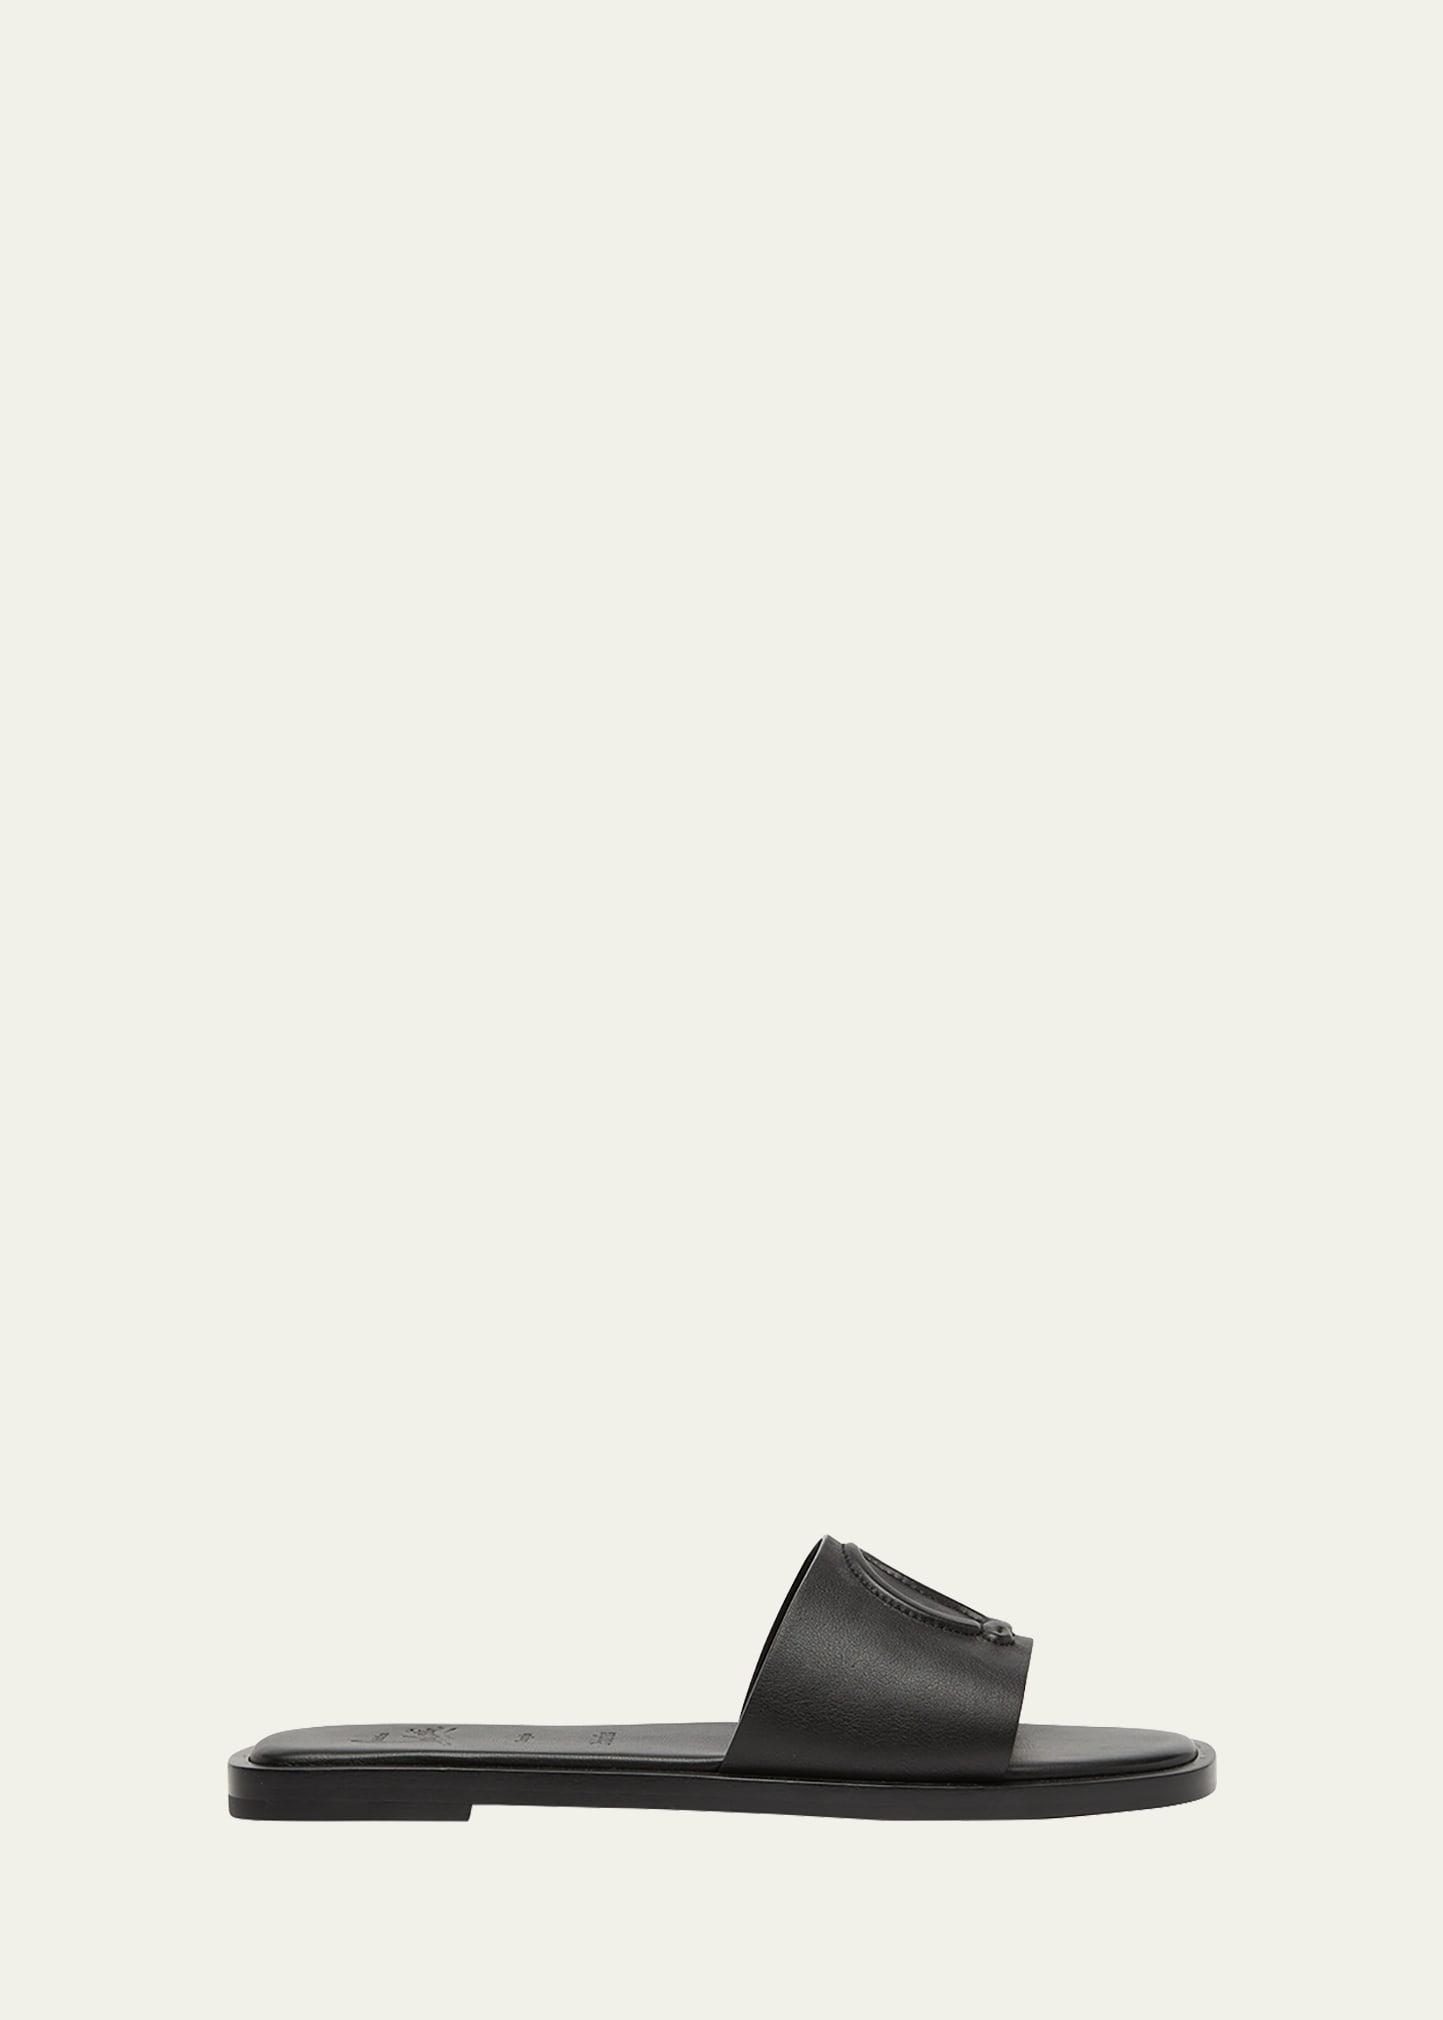 Christian Louboutin CL Logo Slide Sandal Product Image